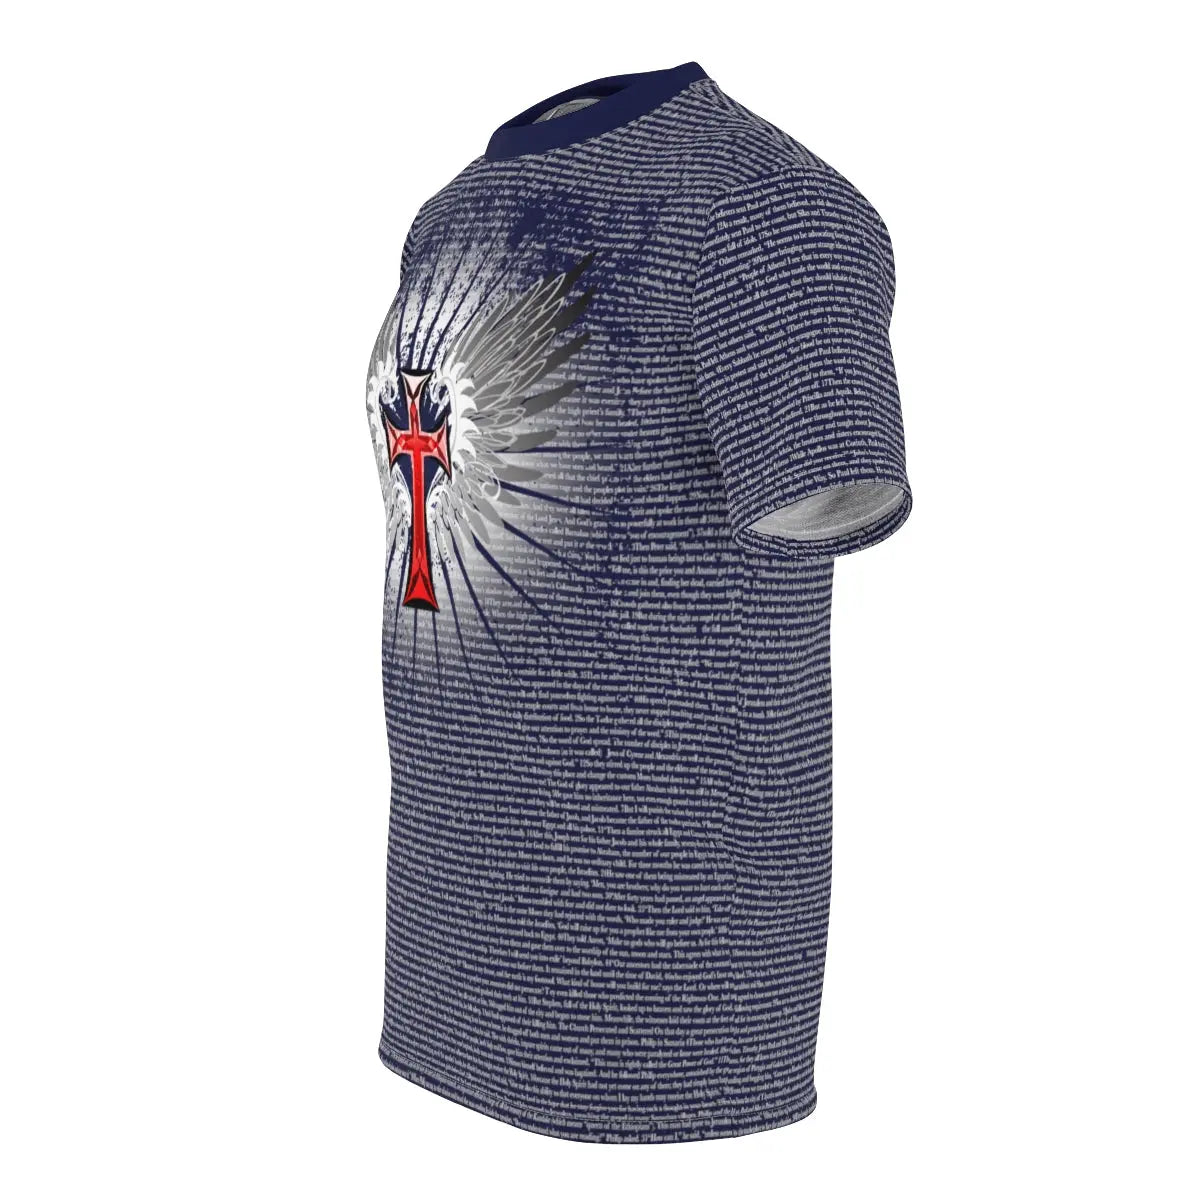 Book of Acts Holy Spirit T-shirt, Christian Faith Shirt, Jesus Shirt - Unisex Printify